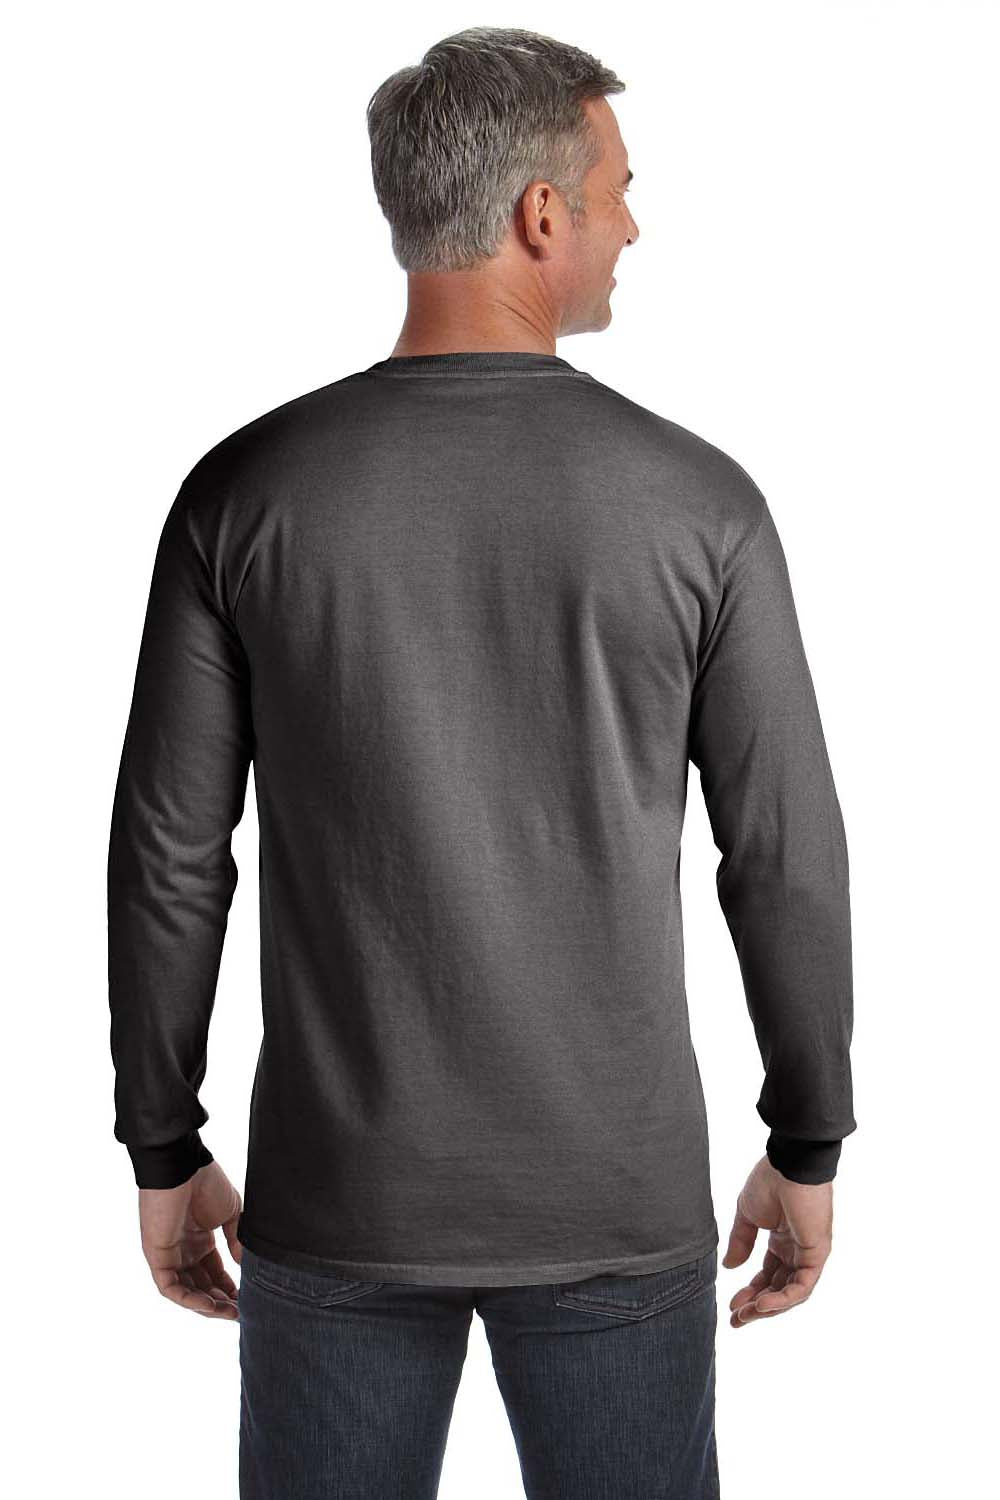 Comfort Colors C4410 Mens Long Sleeve Crewneck T-Shirt w/ Pocket Pepper Grey Back